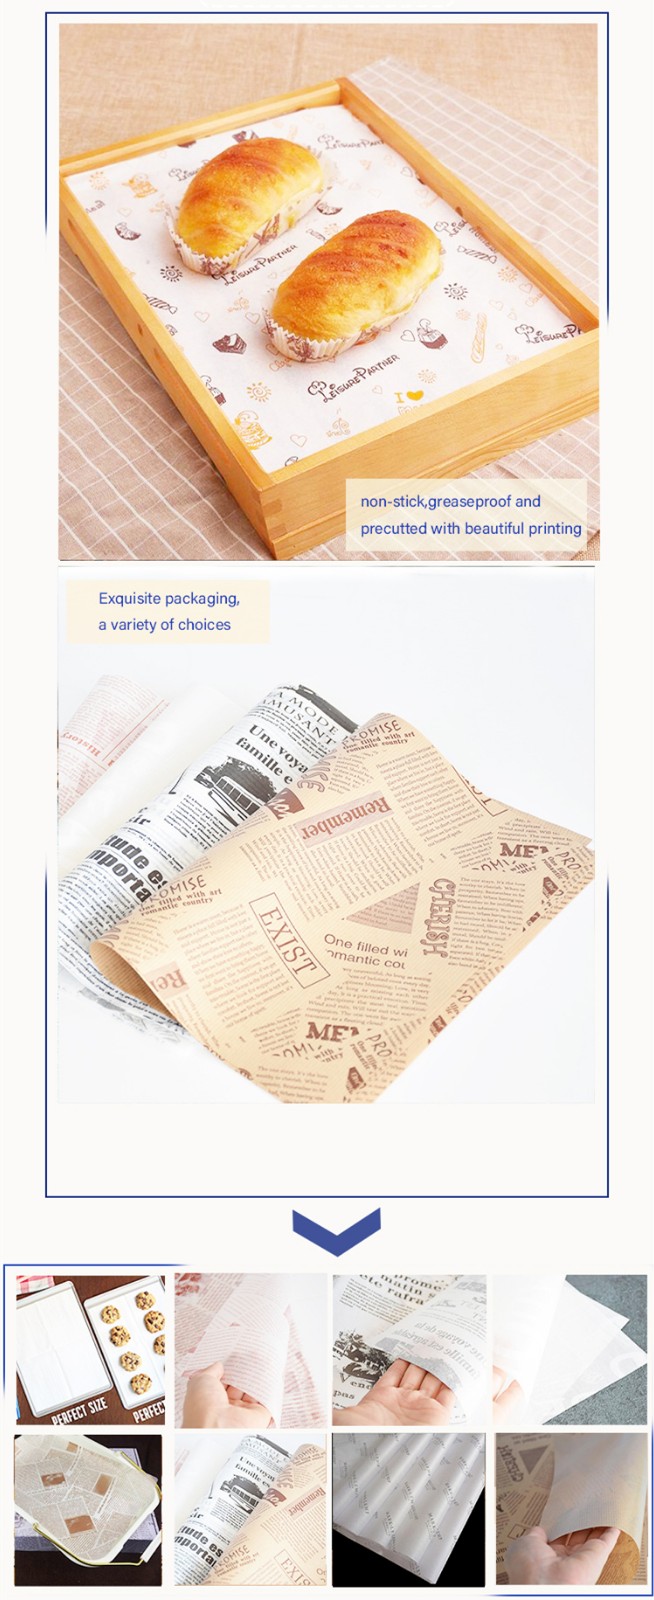 Kolysen reynolds cut rite wax sandwich bags manufacturers for tea packaging-2